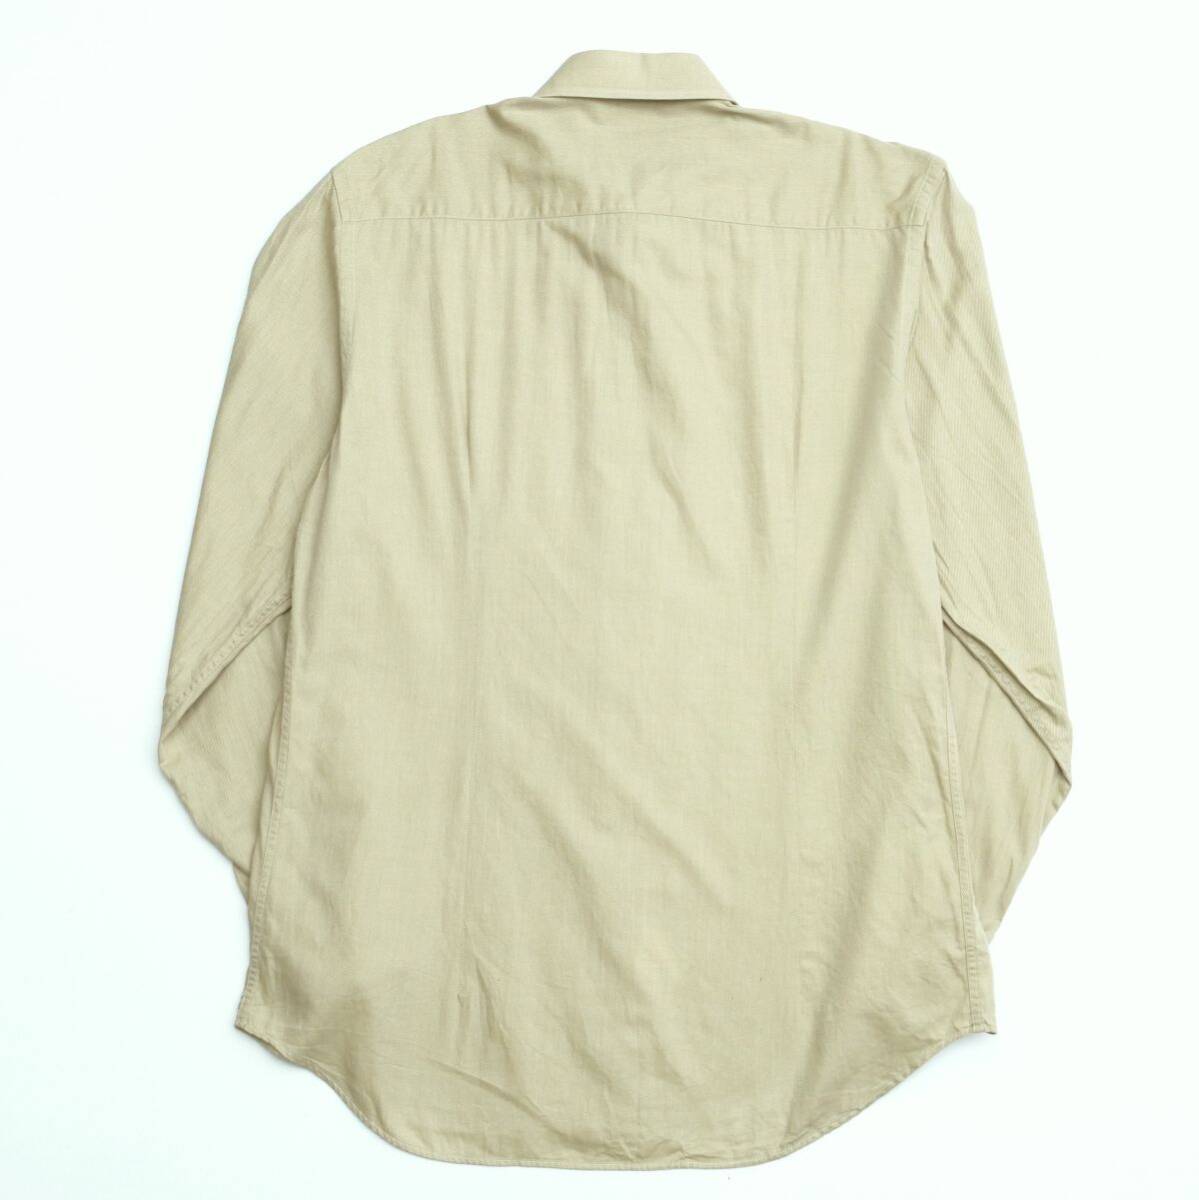 W0933v Italy made Dolce & Gabbana men's 41/16 cotton shirt long sleeve shirt green group 